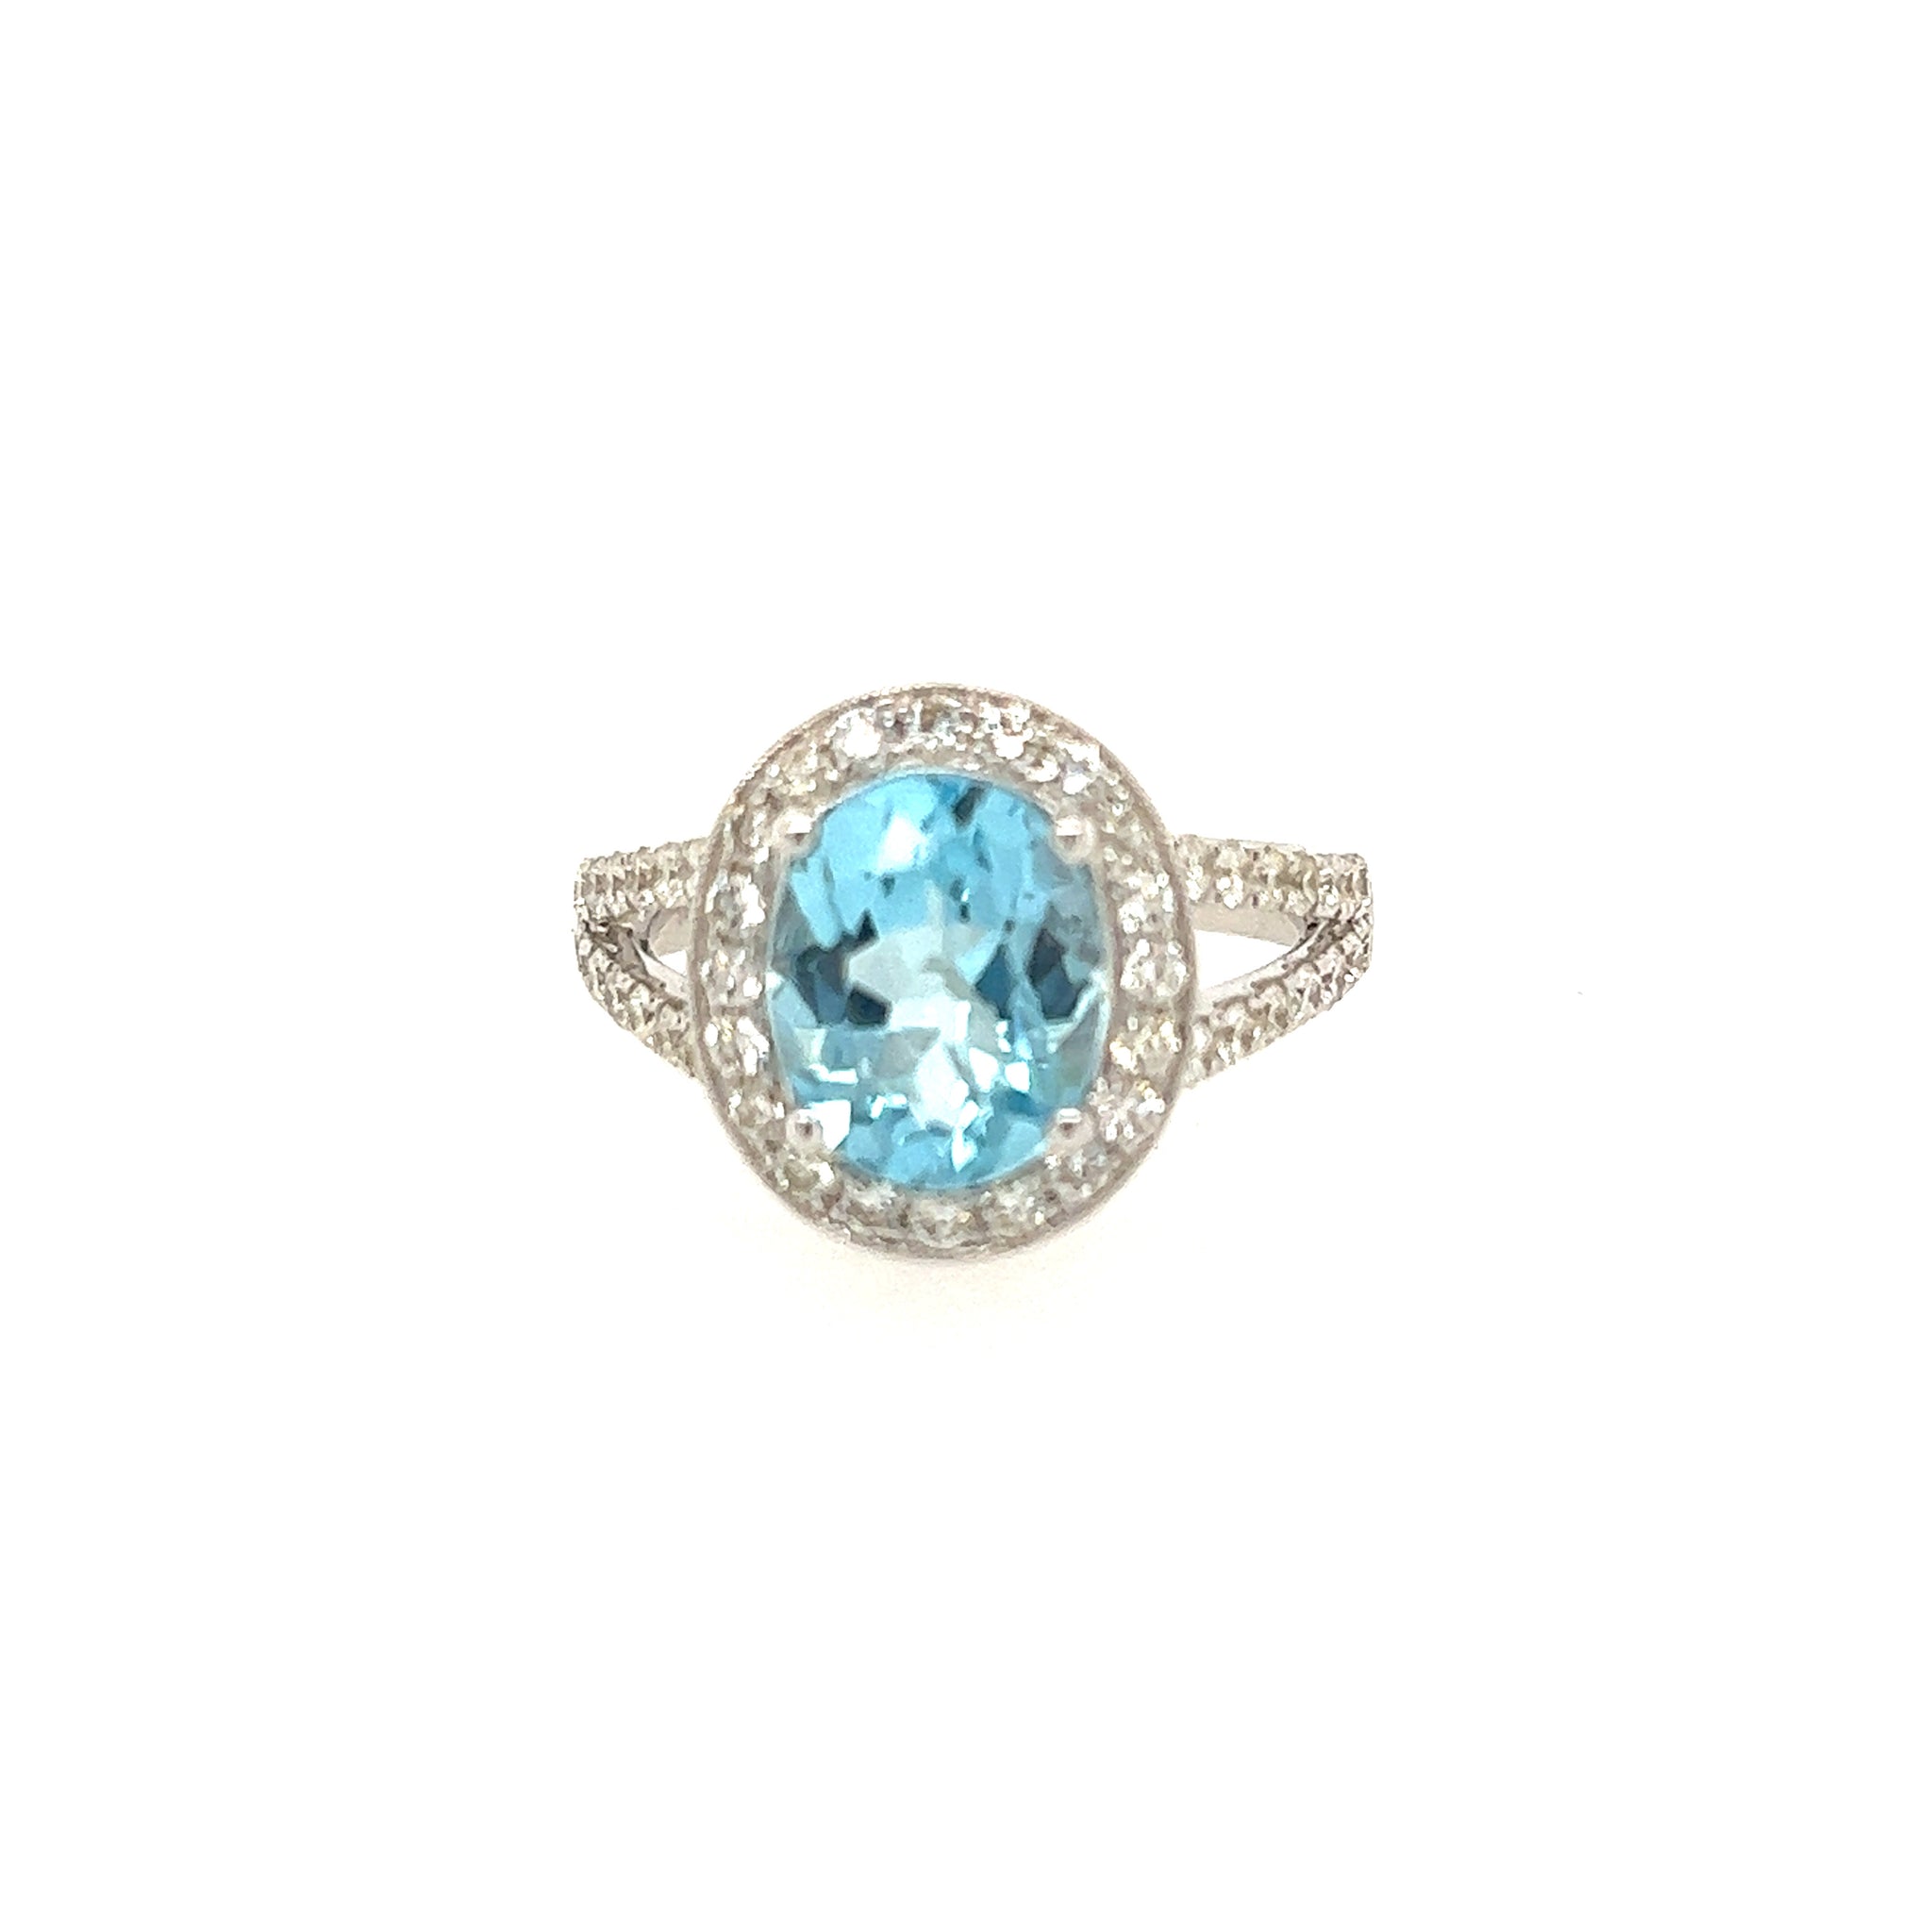 14K White gold Halo Diamond And Blue Topaz Ring Size 7 US